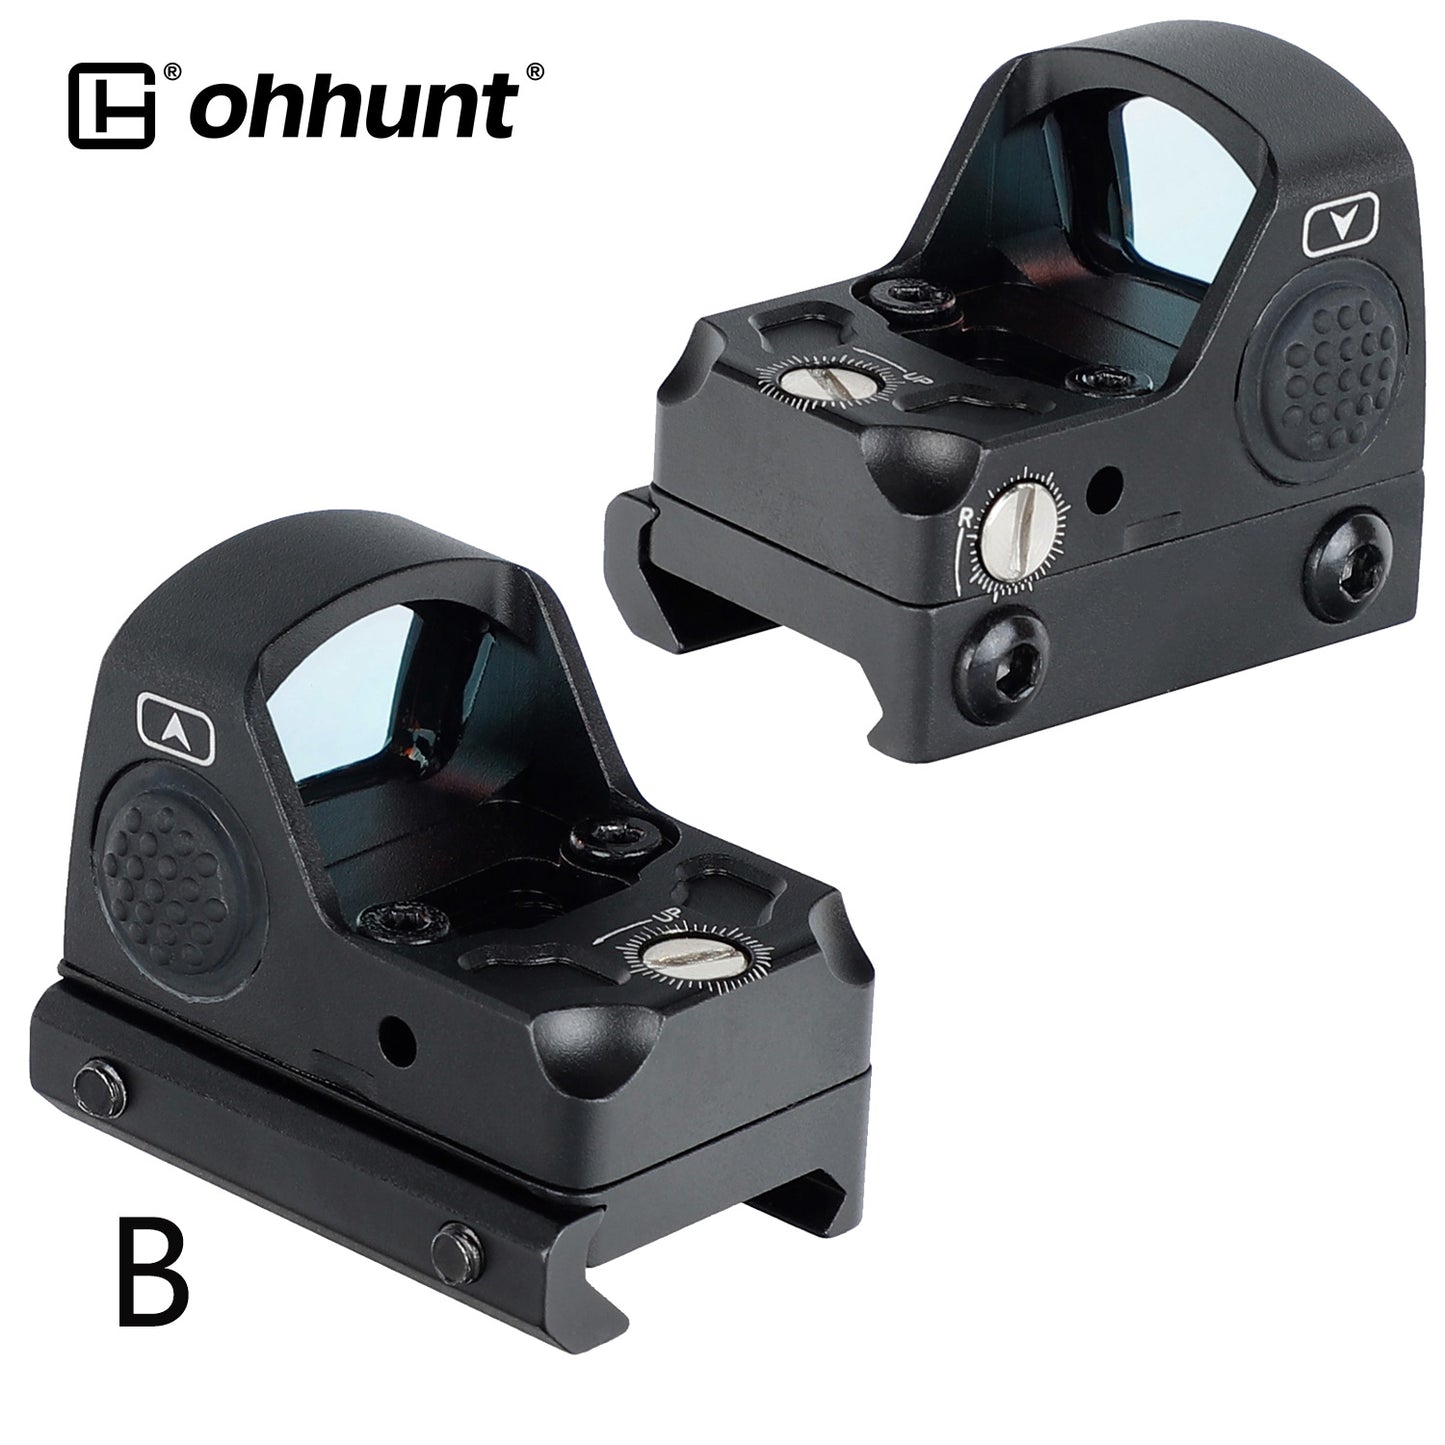 ohhunt® 2 MOA Shake Awake Micro Pistol Red Dot Sight - B Model